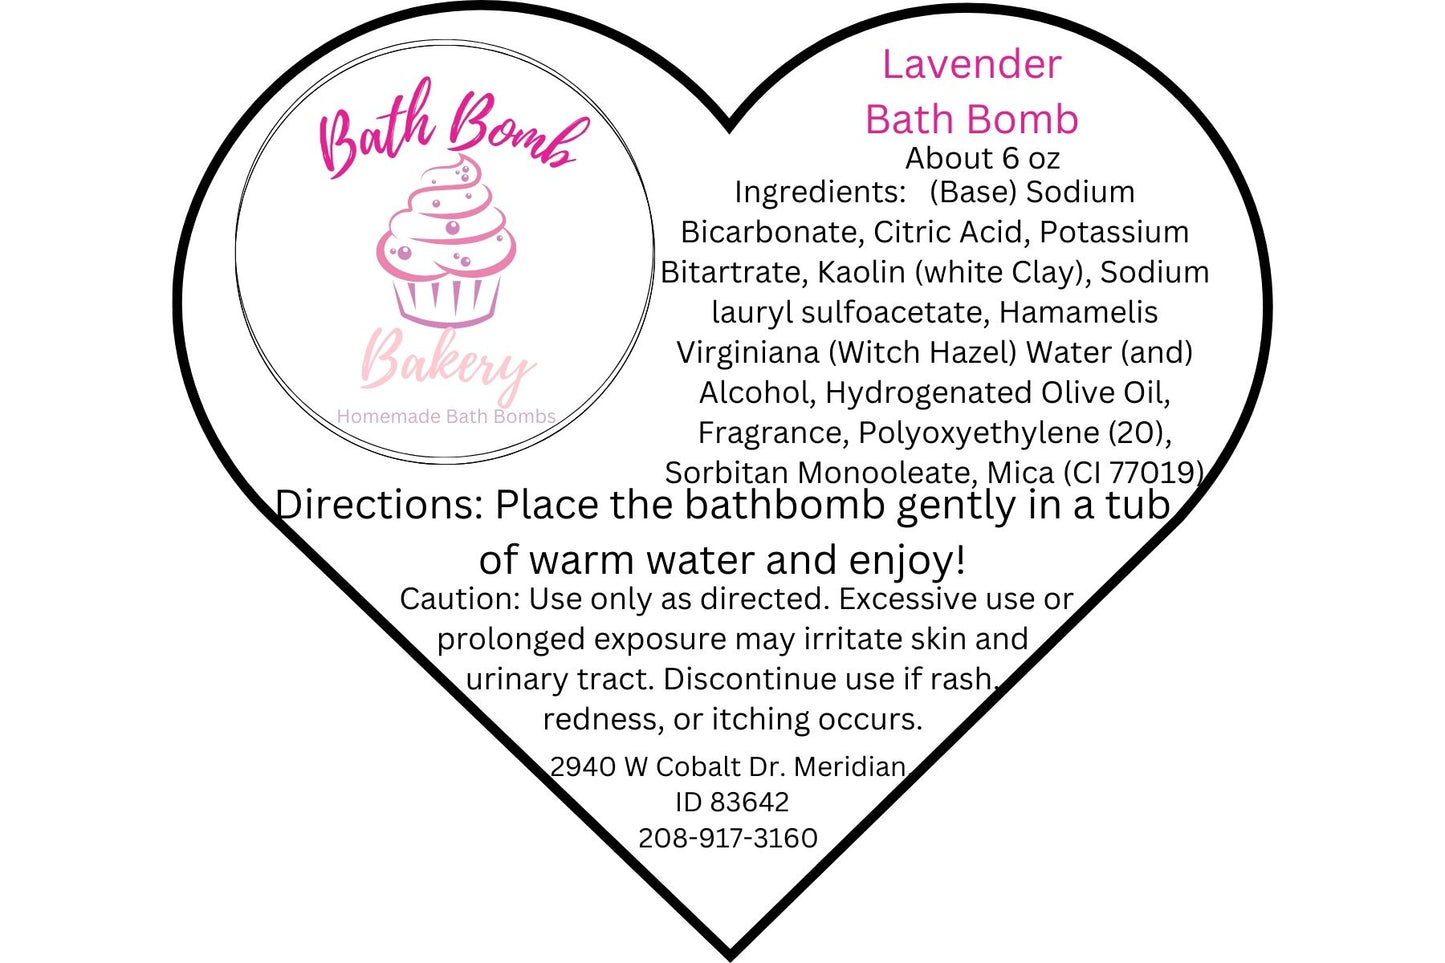 Lavender Love Bath Bomb